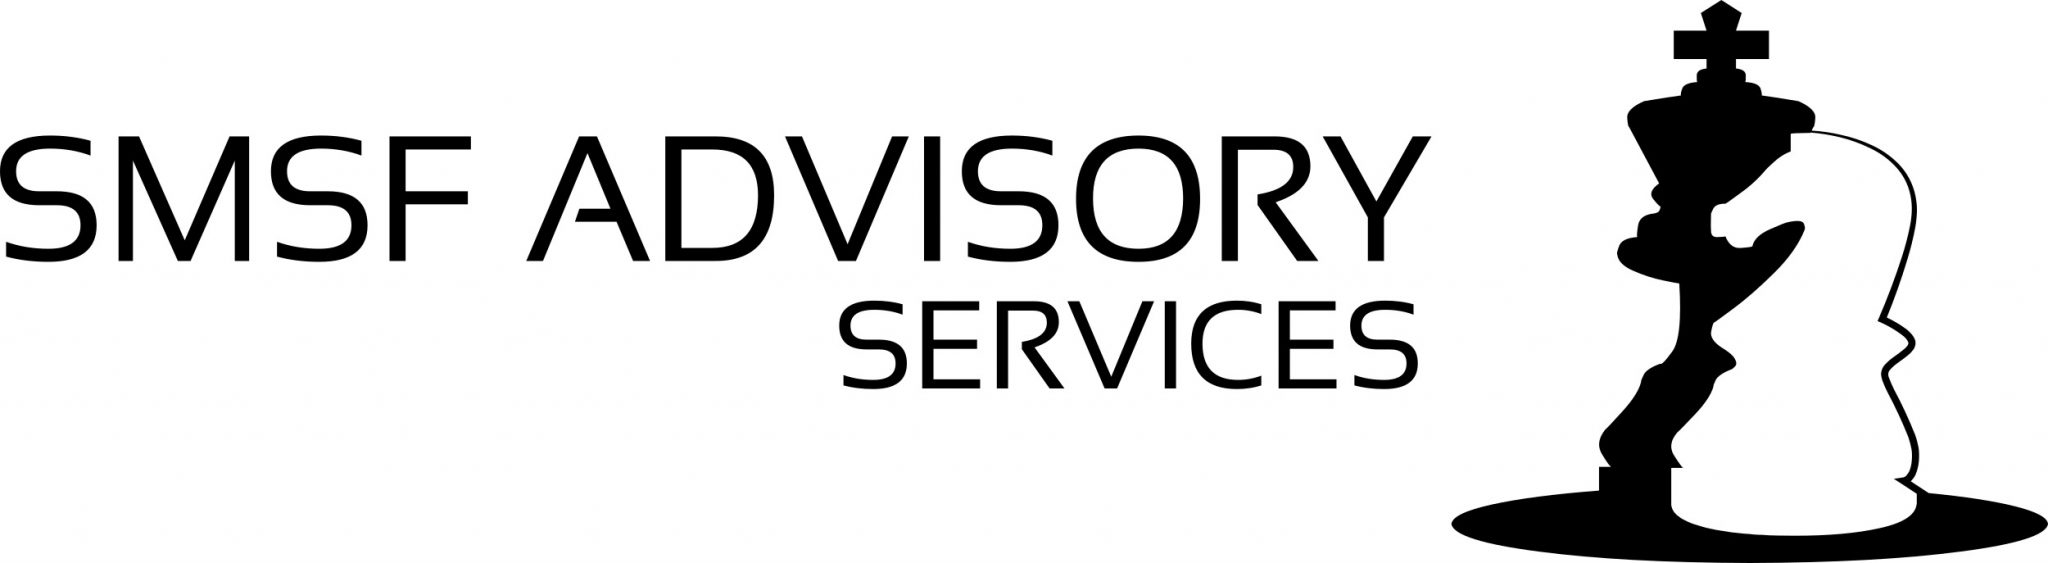 SMSF Advisory Services